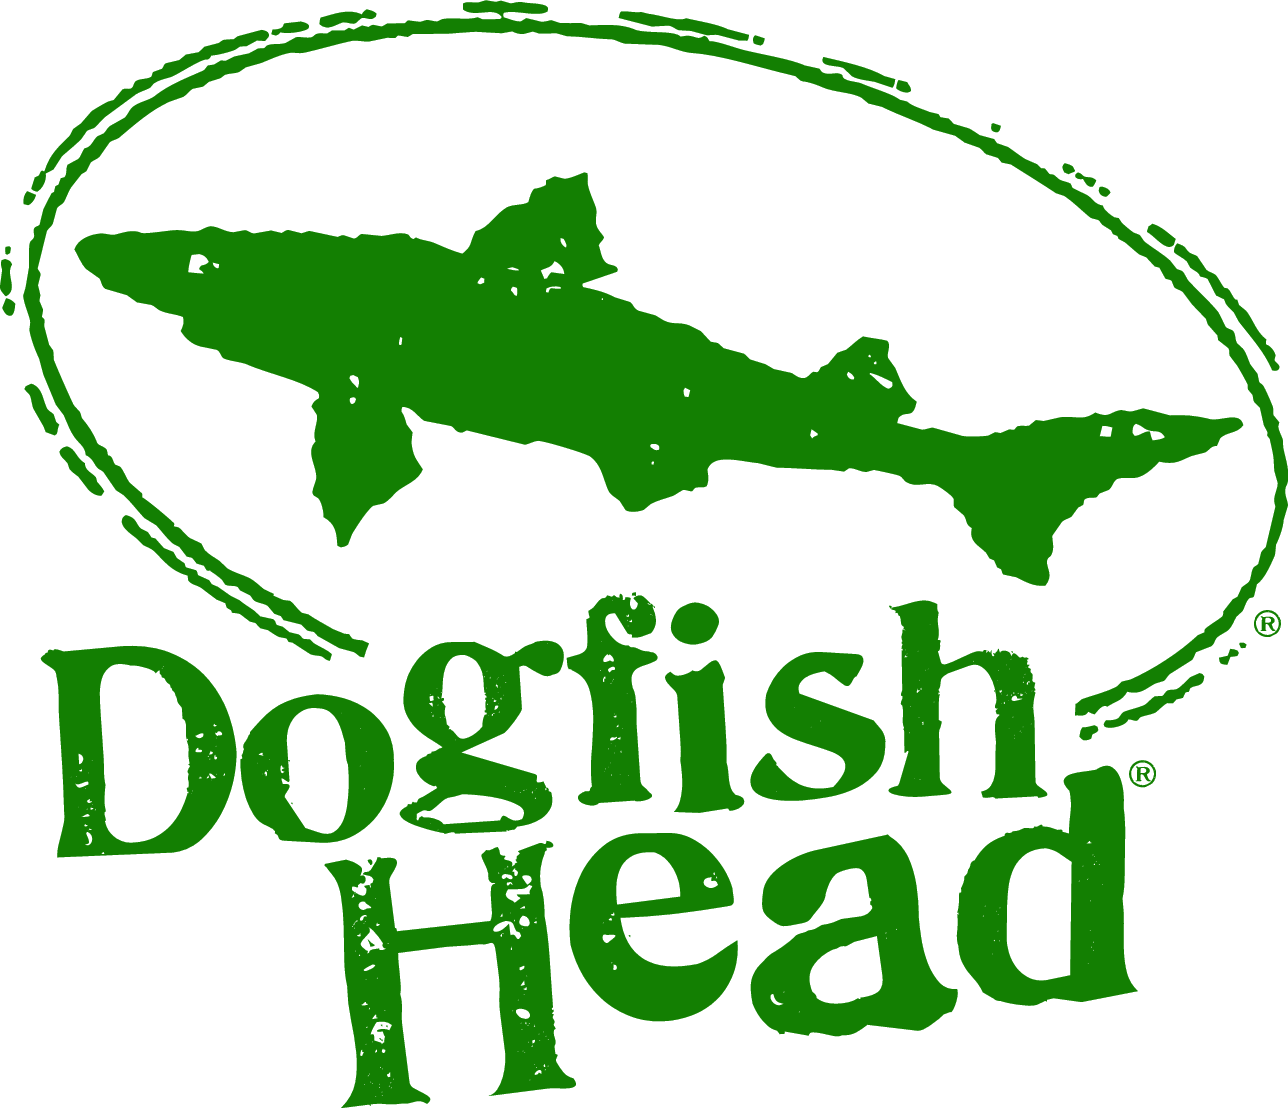 Dogfish Head logo